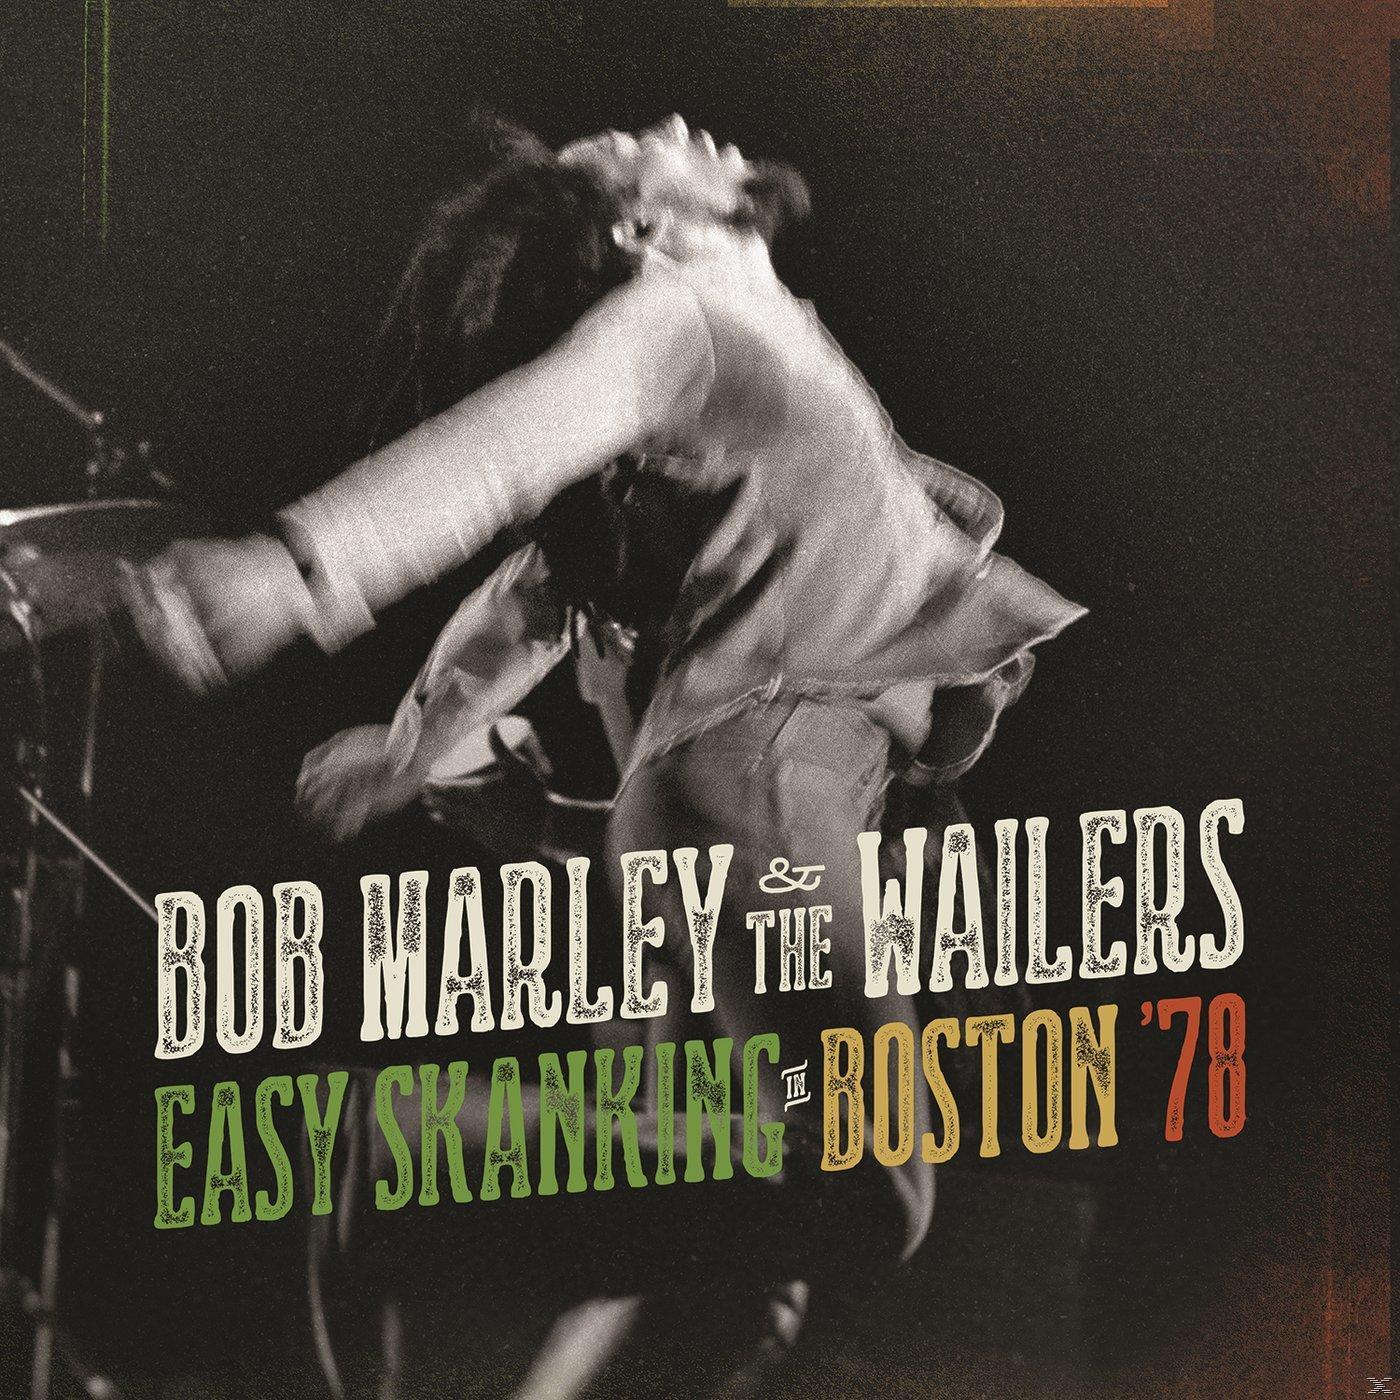 (Vinyl) - - Wailers Easy Marley, \'78 Bob In Skanking The Boston